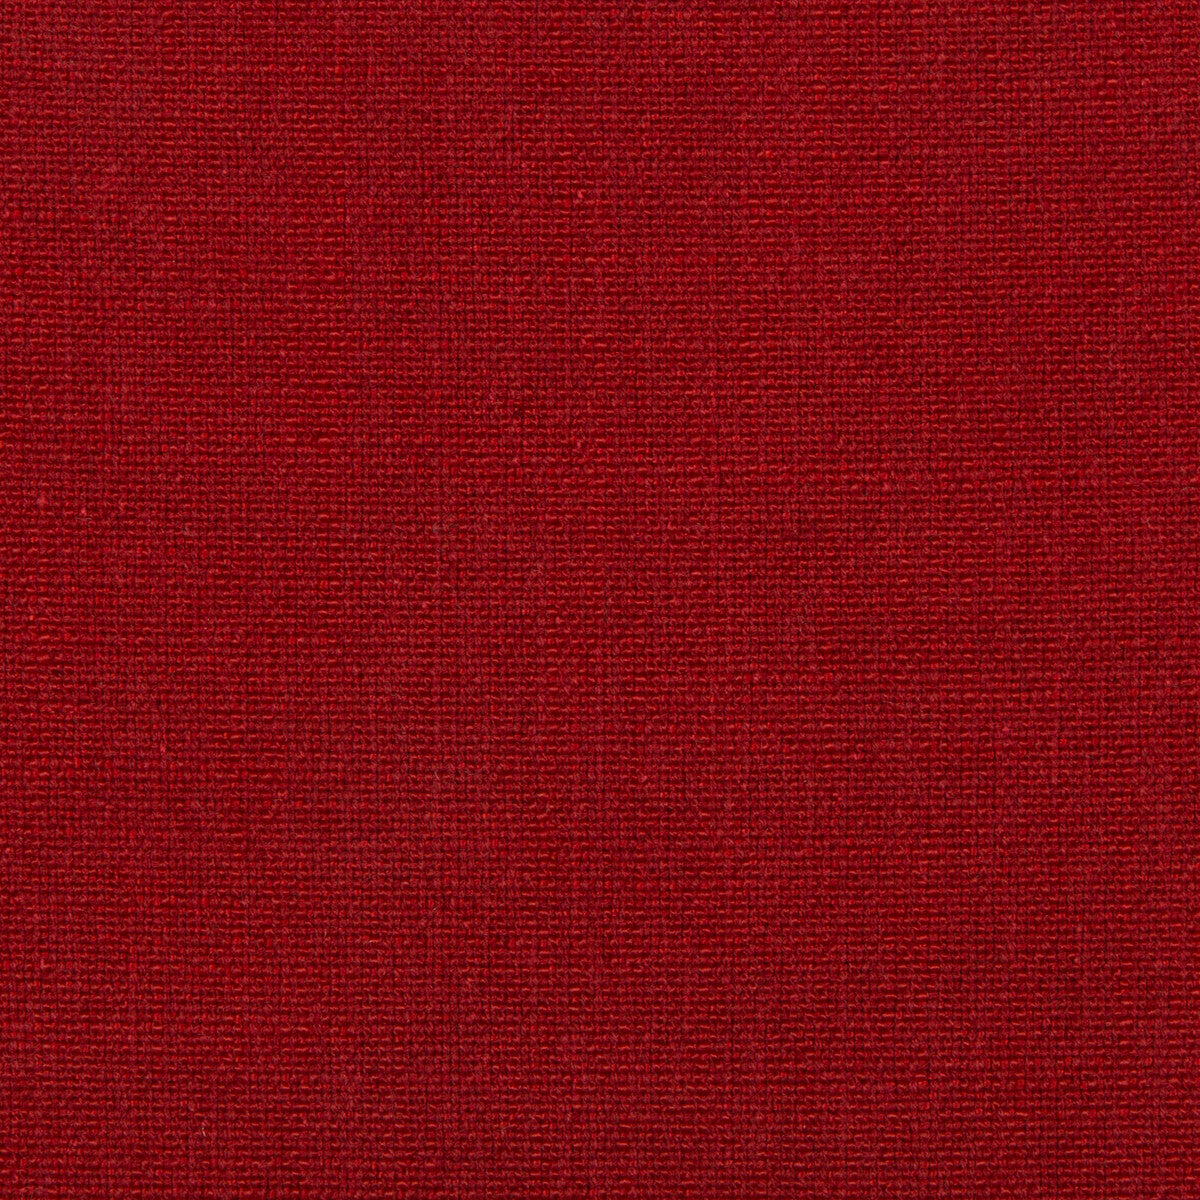 Kravet Smart fabric in 35226-9 color - pattern 35226.9.0 - by Kravet Smart in the Performance Kravetarmor collection